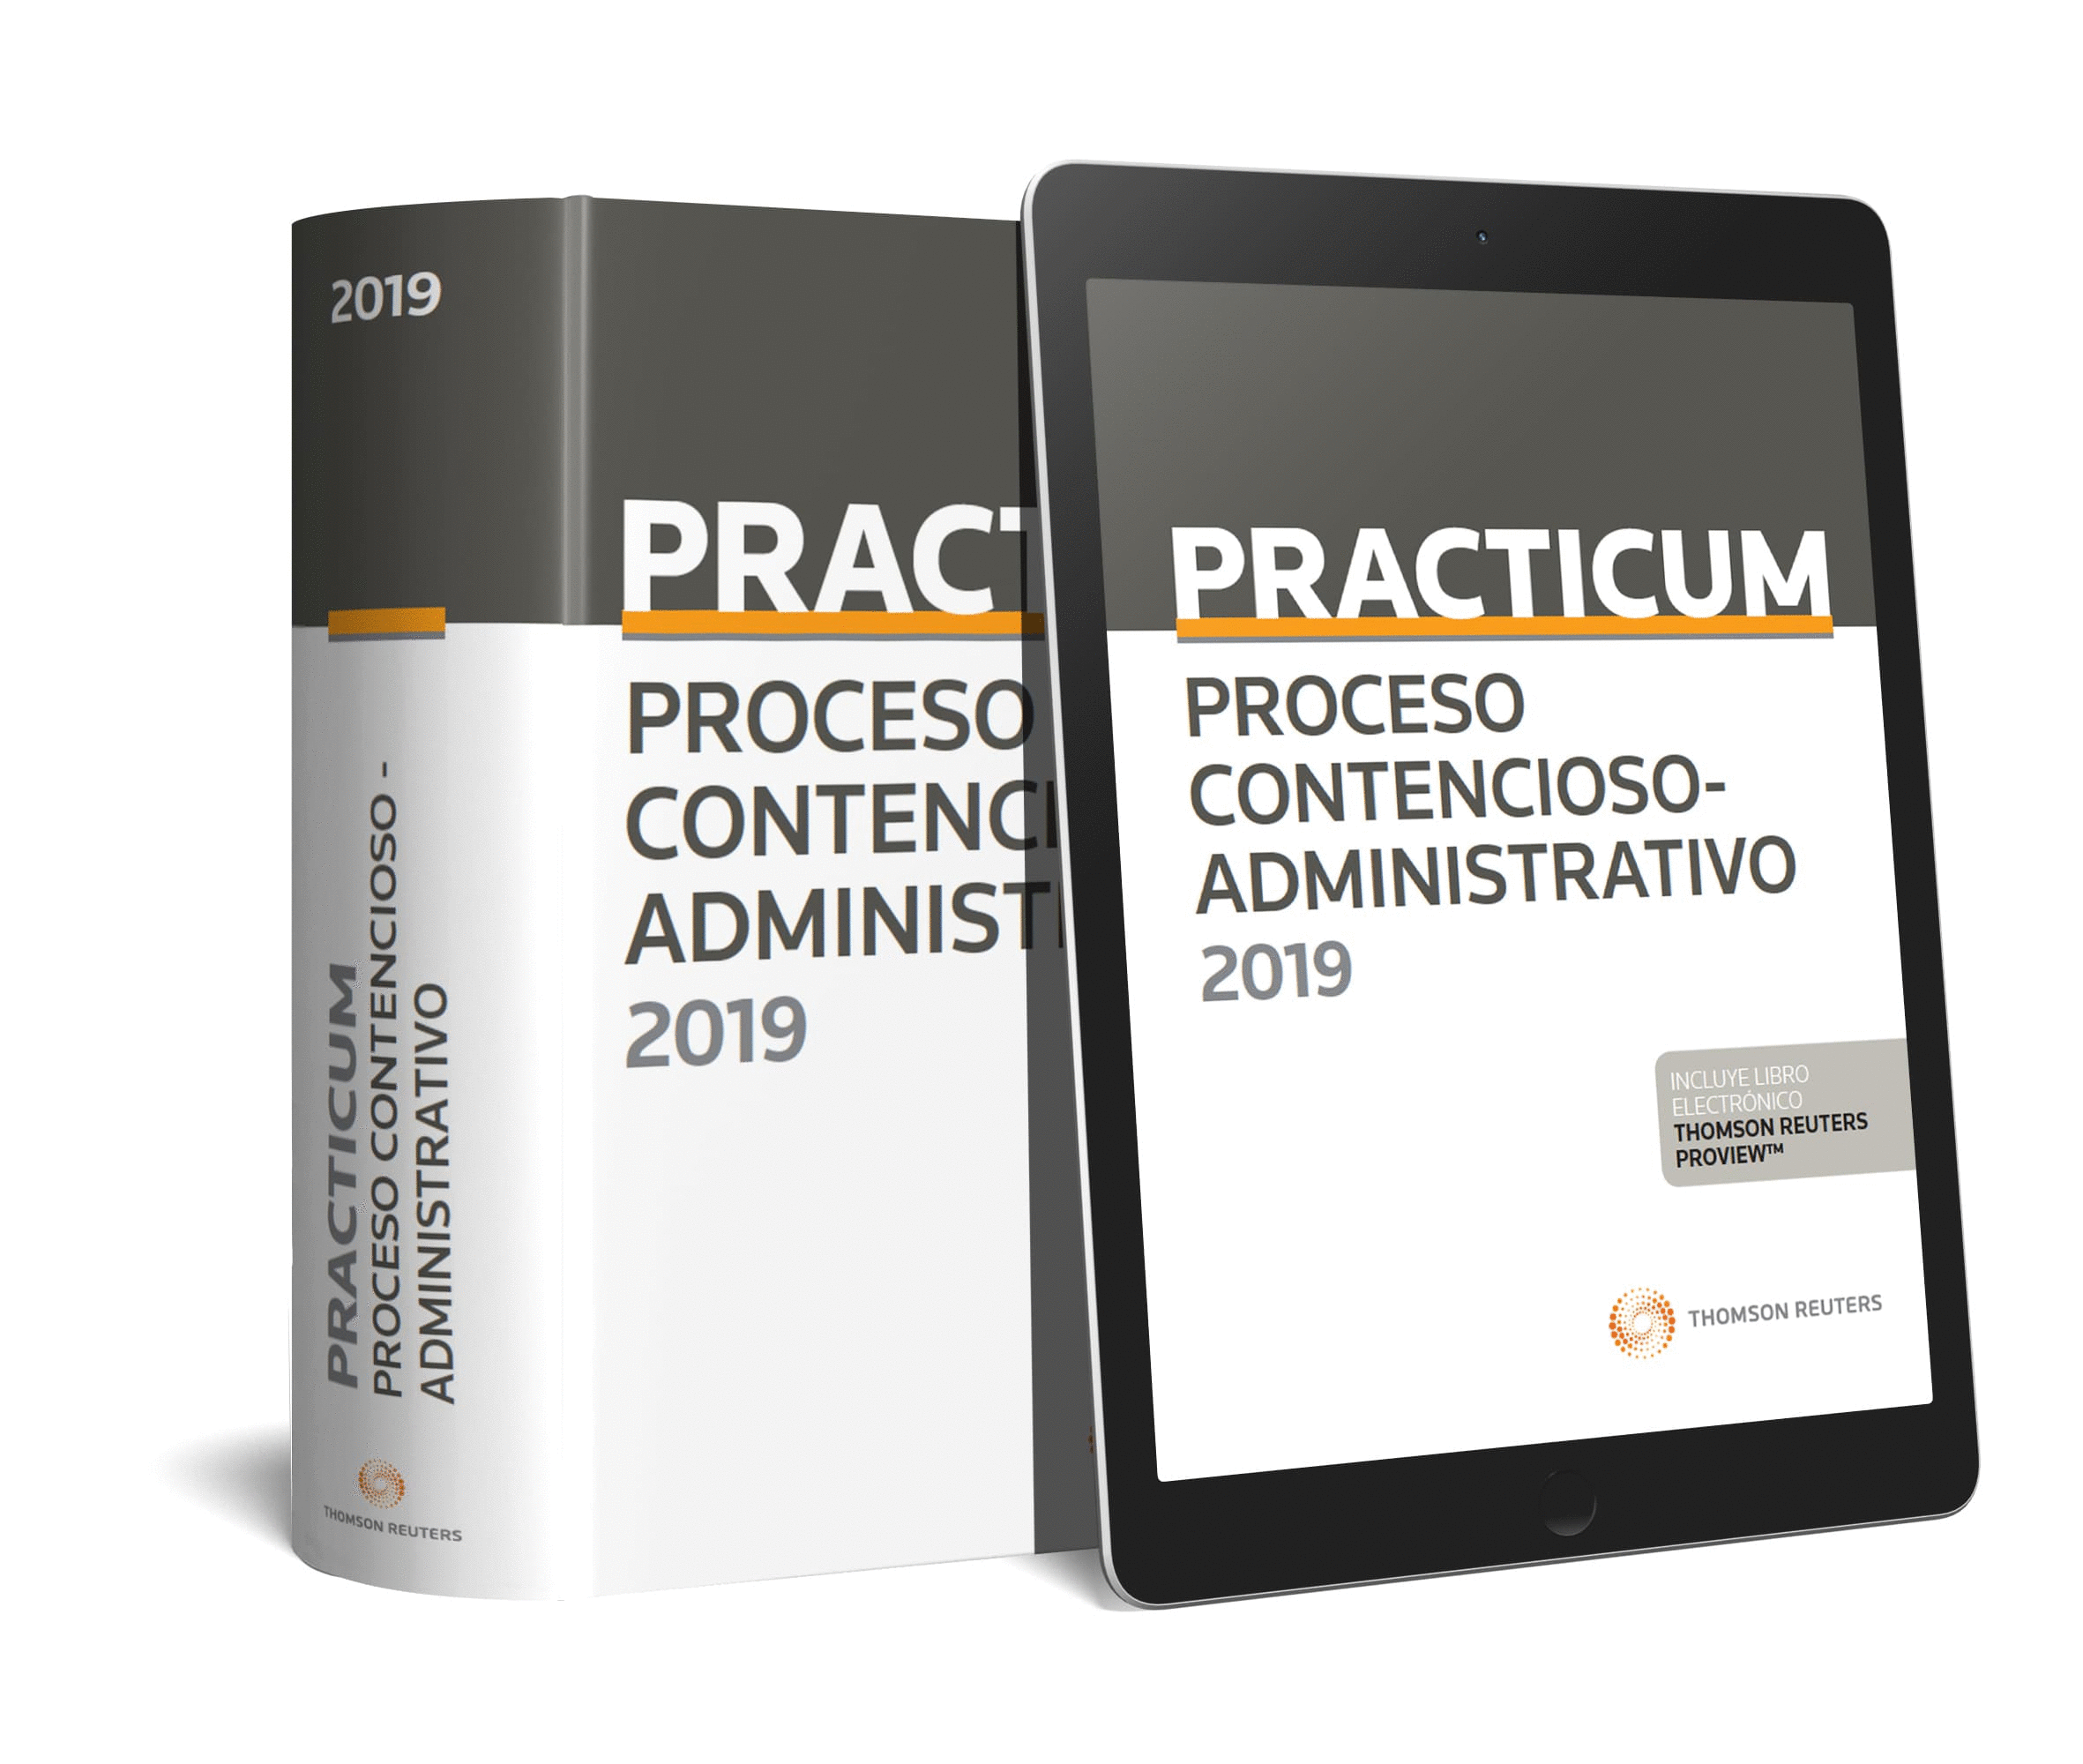 PRACTICUM PROCESO CONTENCIOSO - ADMINISTRATIVO 2019 (DUO)